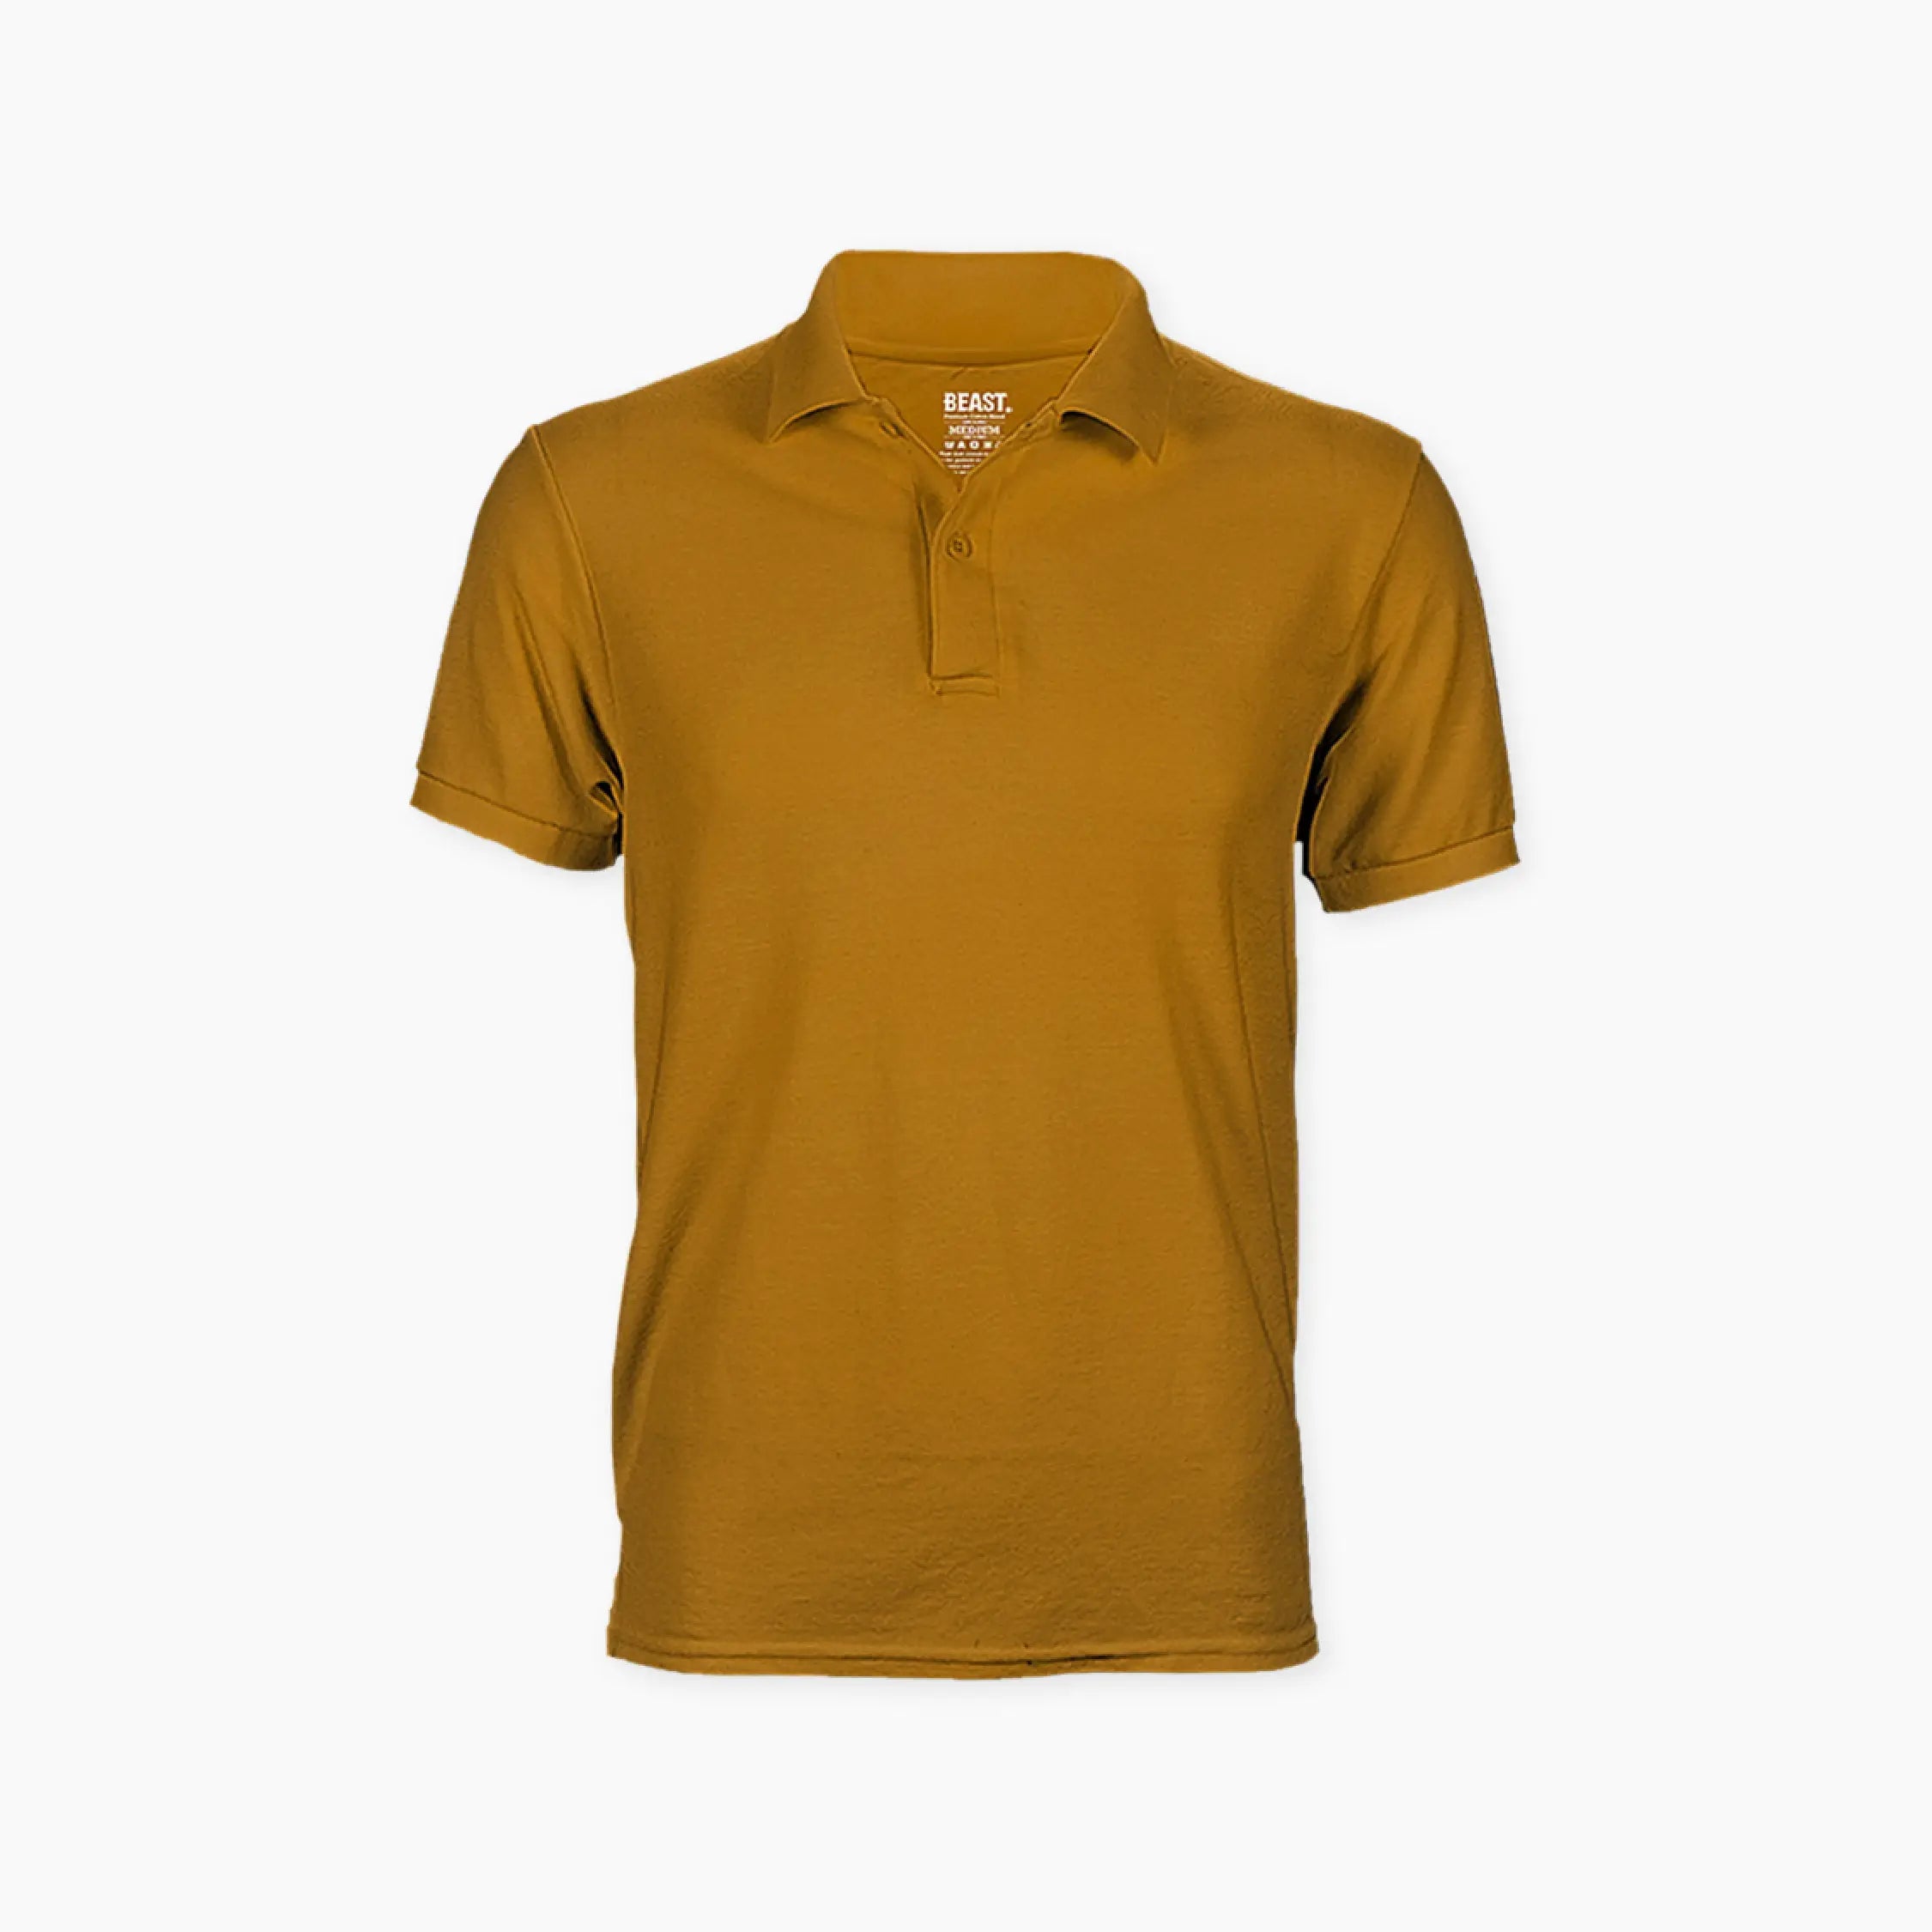 beast-mustard-polo-t-shirt